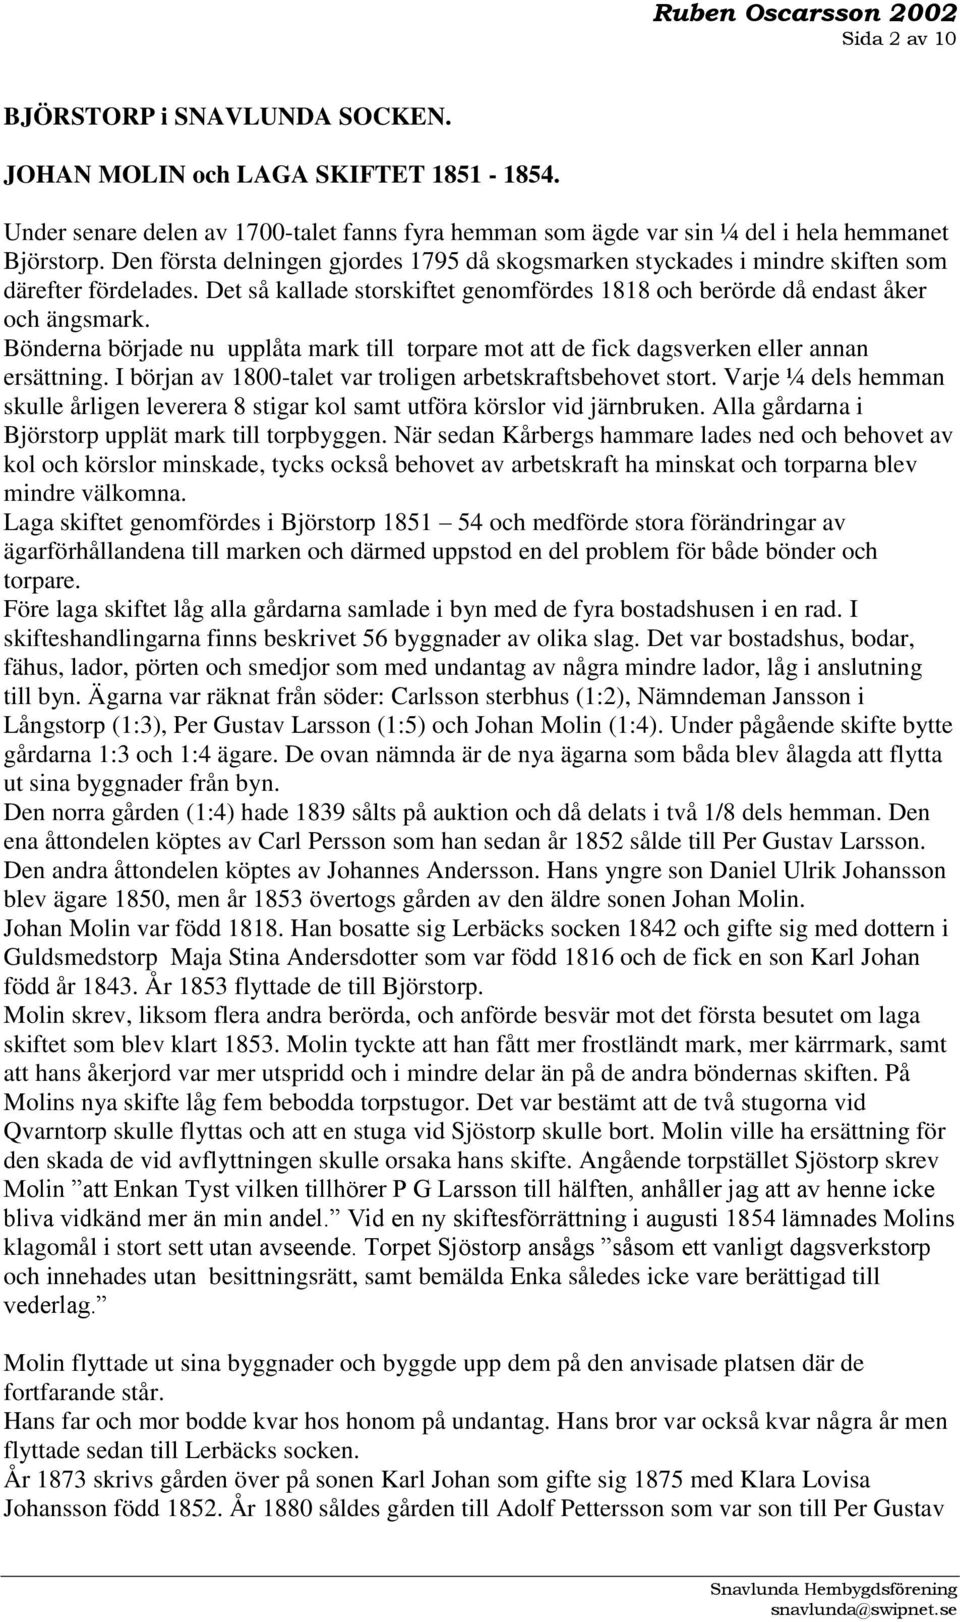 Ruben Oscarsson 2002 Sida 1 av 10 - PDF Free Download